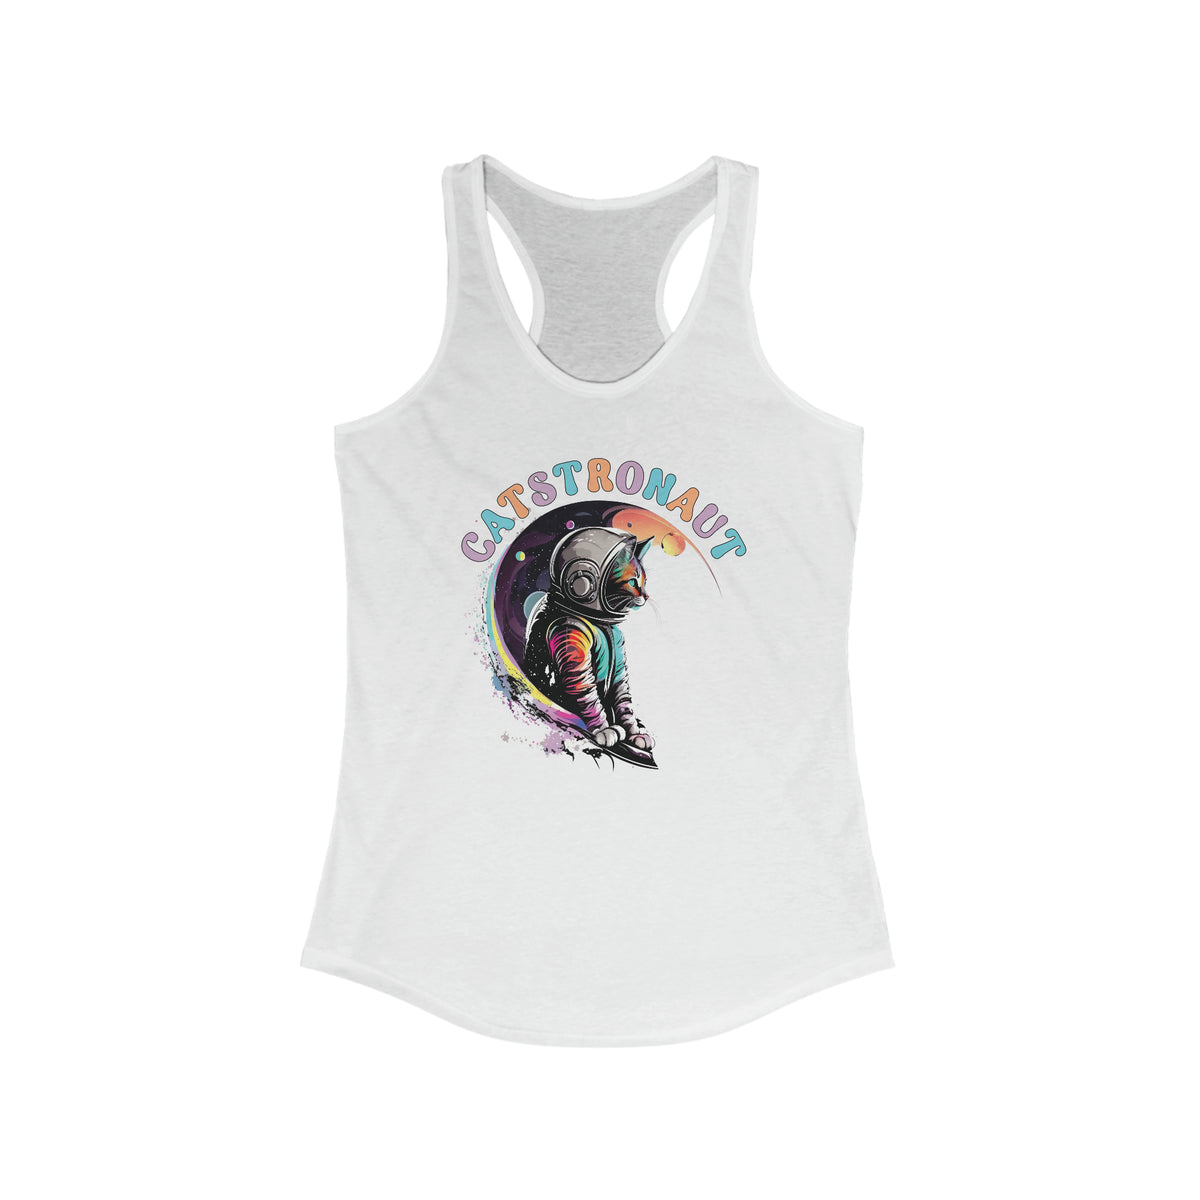 Catstronaut Funny Cat Shirt |Astronaut Shirt | Cat In Space Shirt | Cat Lover Gift | Nerd Gift | Women's Slim-fit Racerback Tank Top